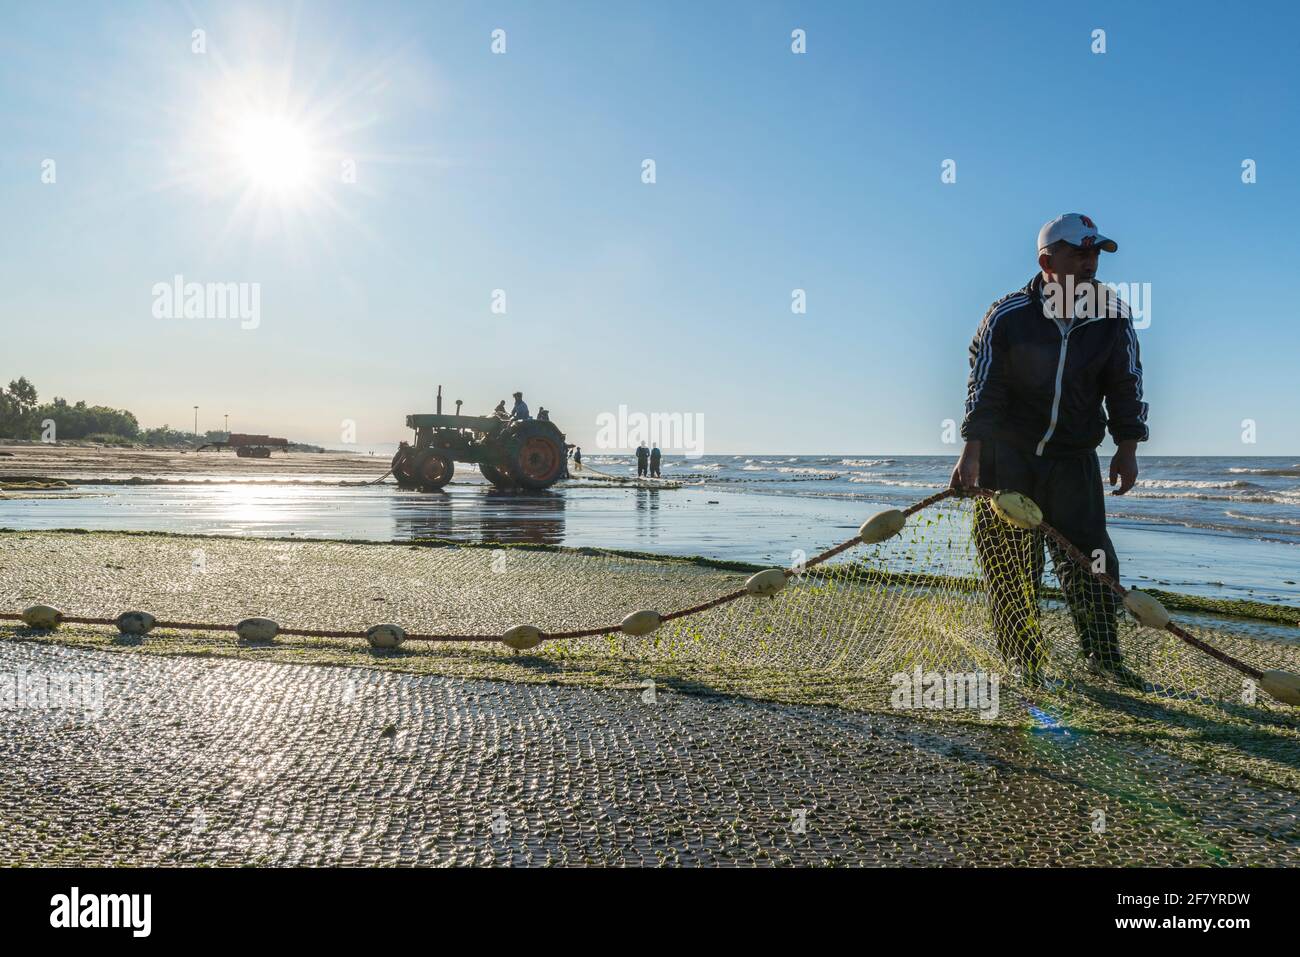 Fishermen hauling in the catch in Babolsar on the Caspian Sea. Iran Stock Photo